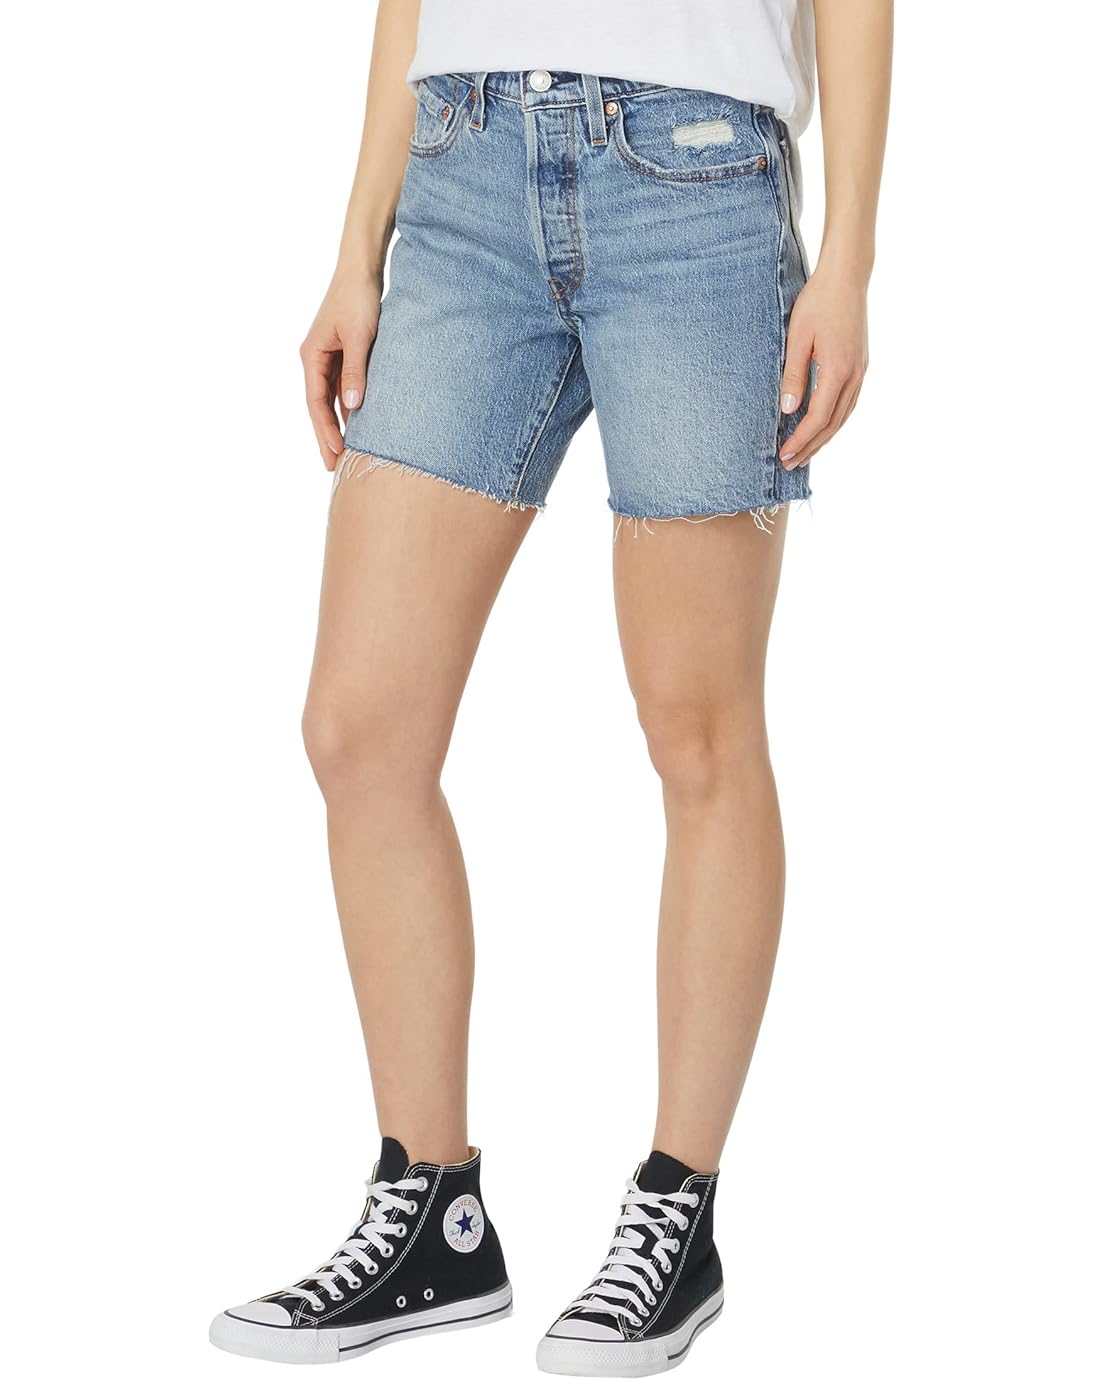  Levis Premium 501 Mid Thigh Shorts